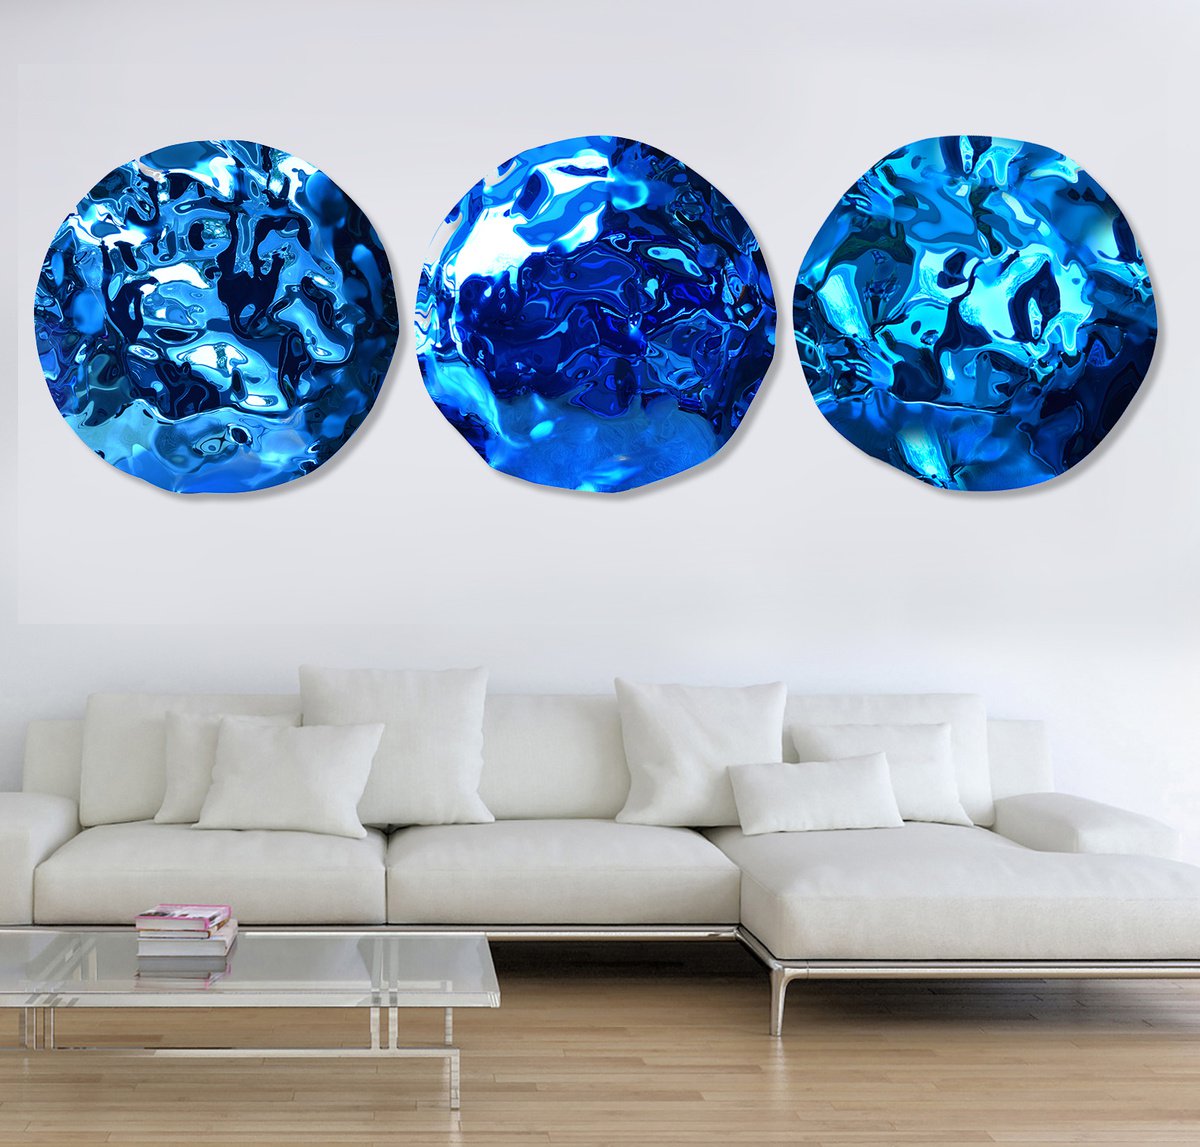 Blue reflections Turquoise Triptych 270 cm x 90 cm Unique Sculptural Large 3-Dimensional C... by Anna Sidi-Yacoub